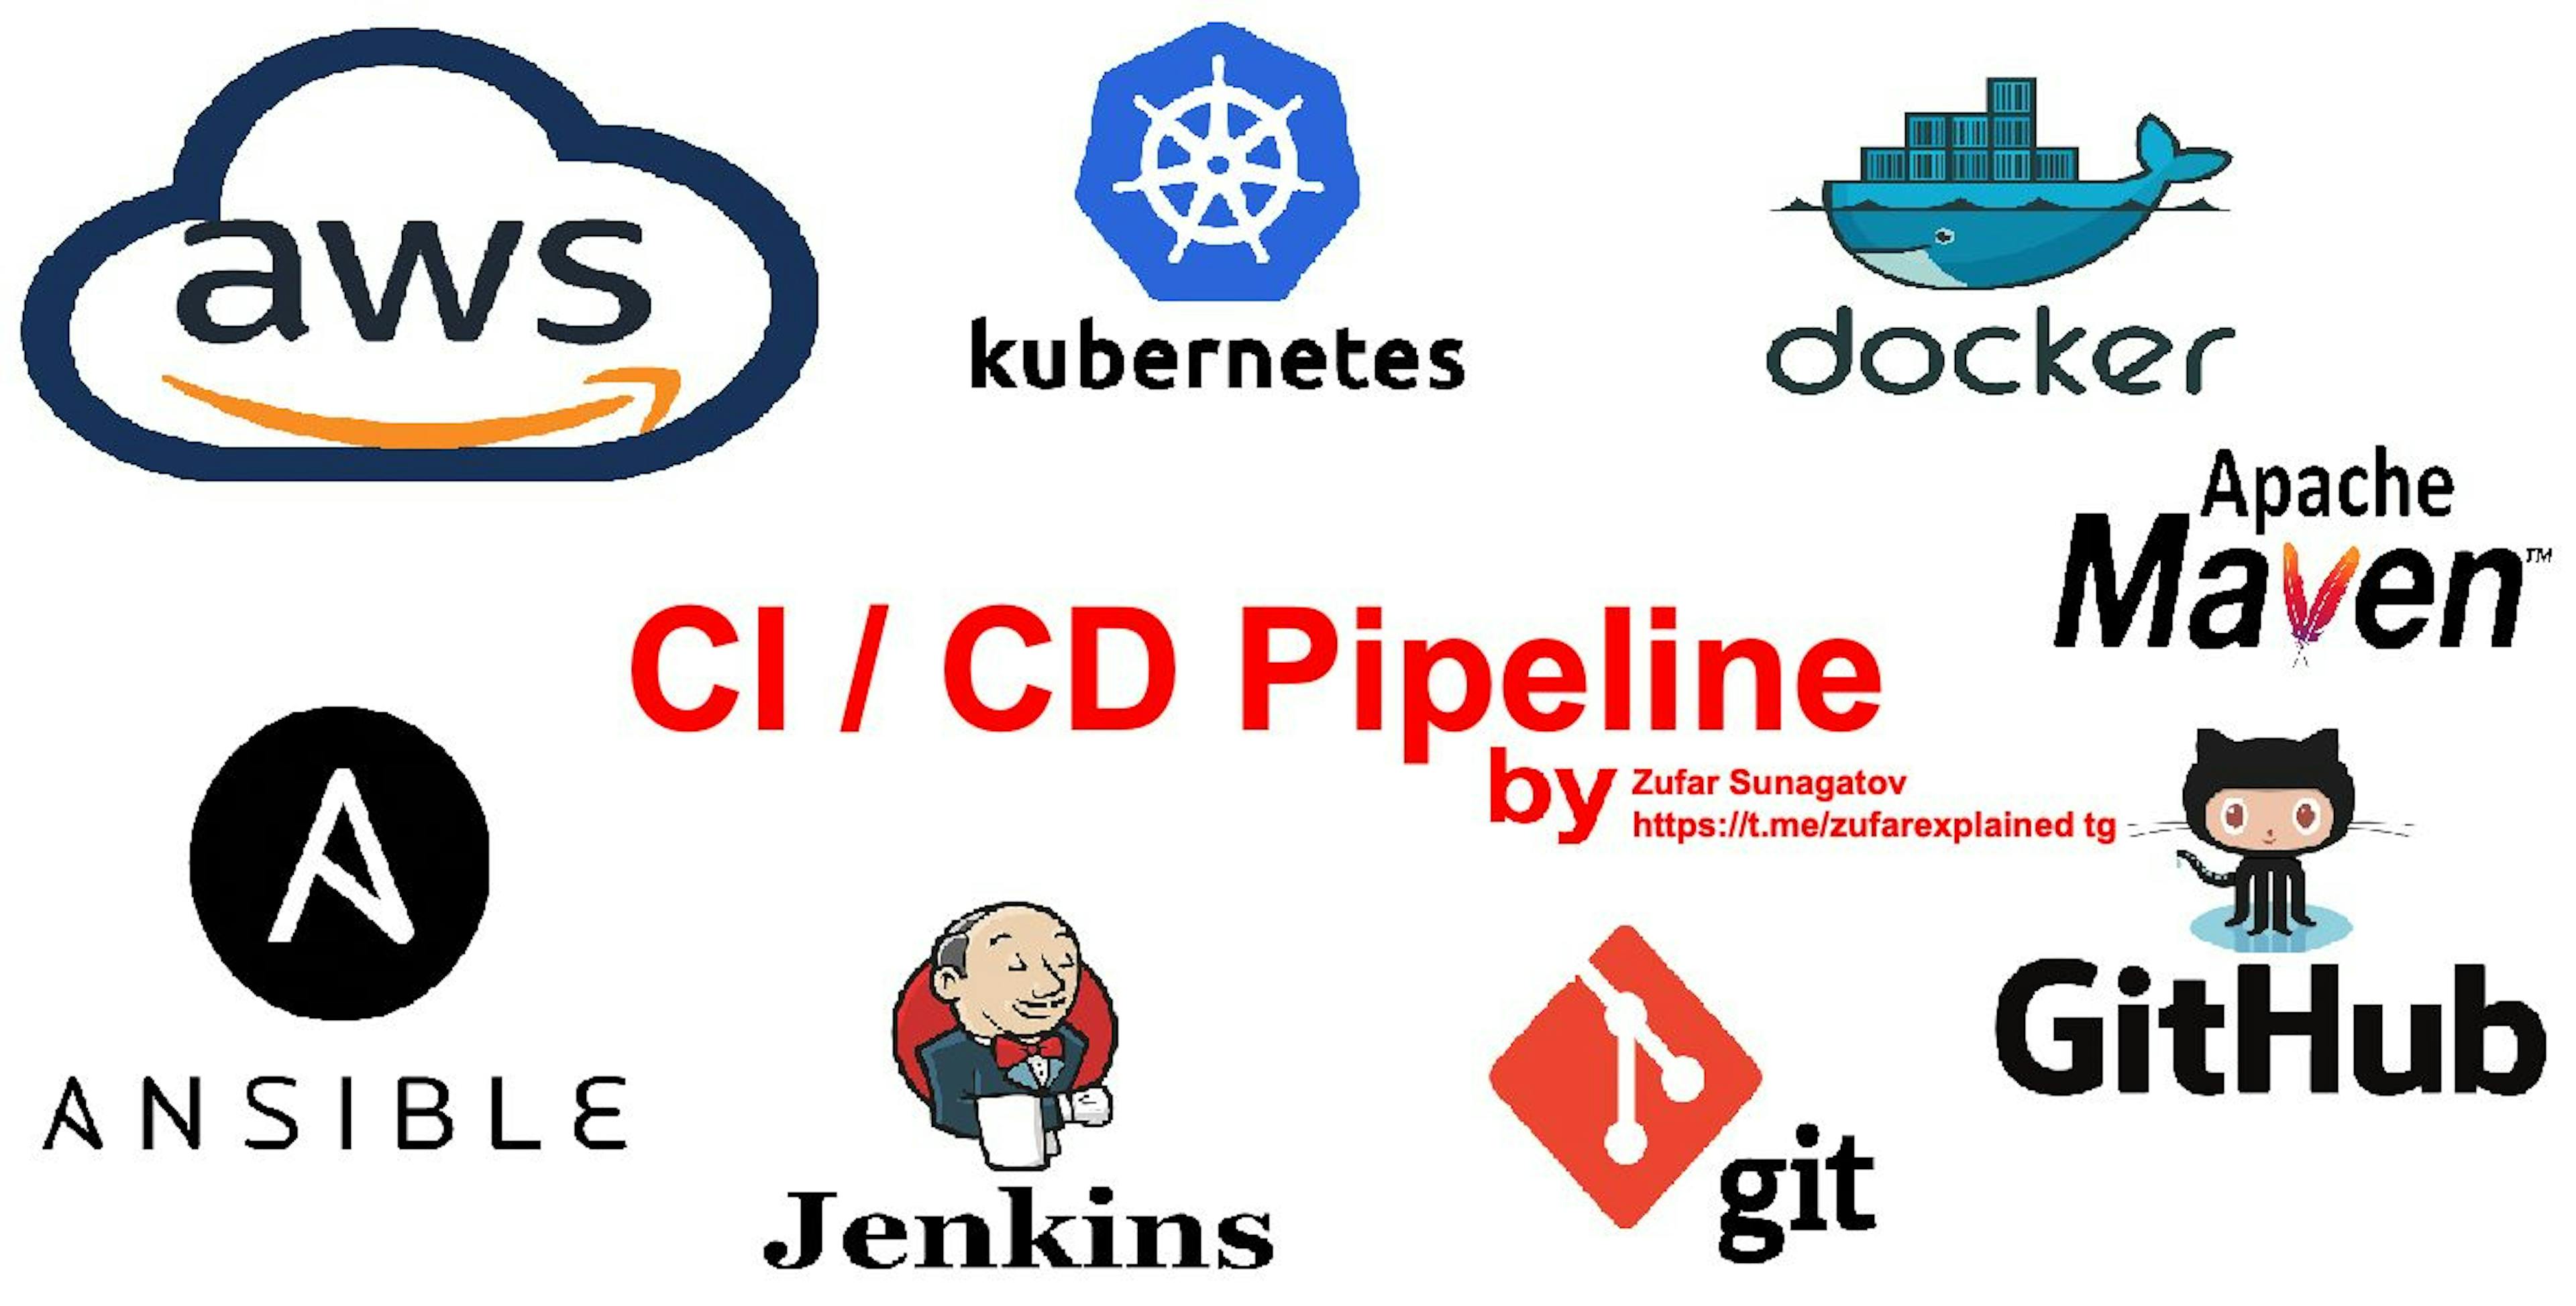 featured image - Construindo um pipeline de CI/CD com AWS, K8S, Docker, Ansible, Git, Github, Apache Maven e Jenkins